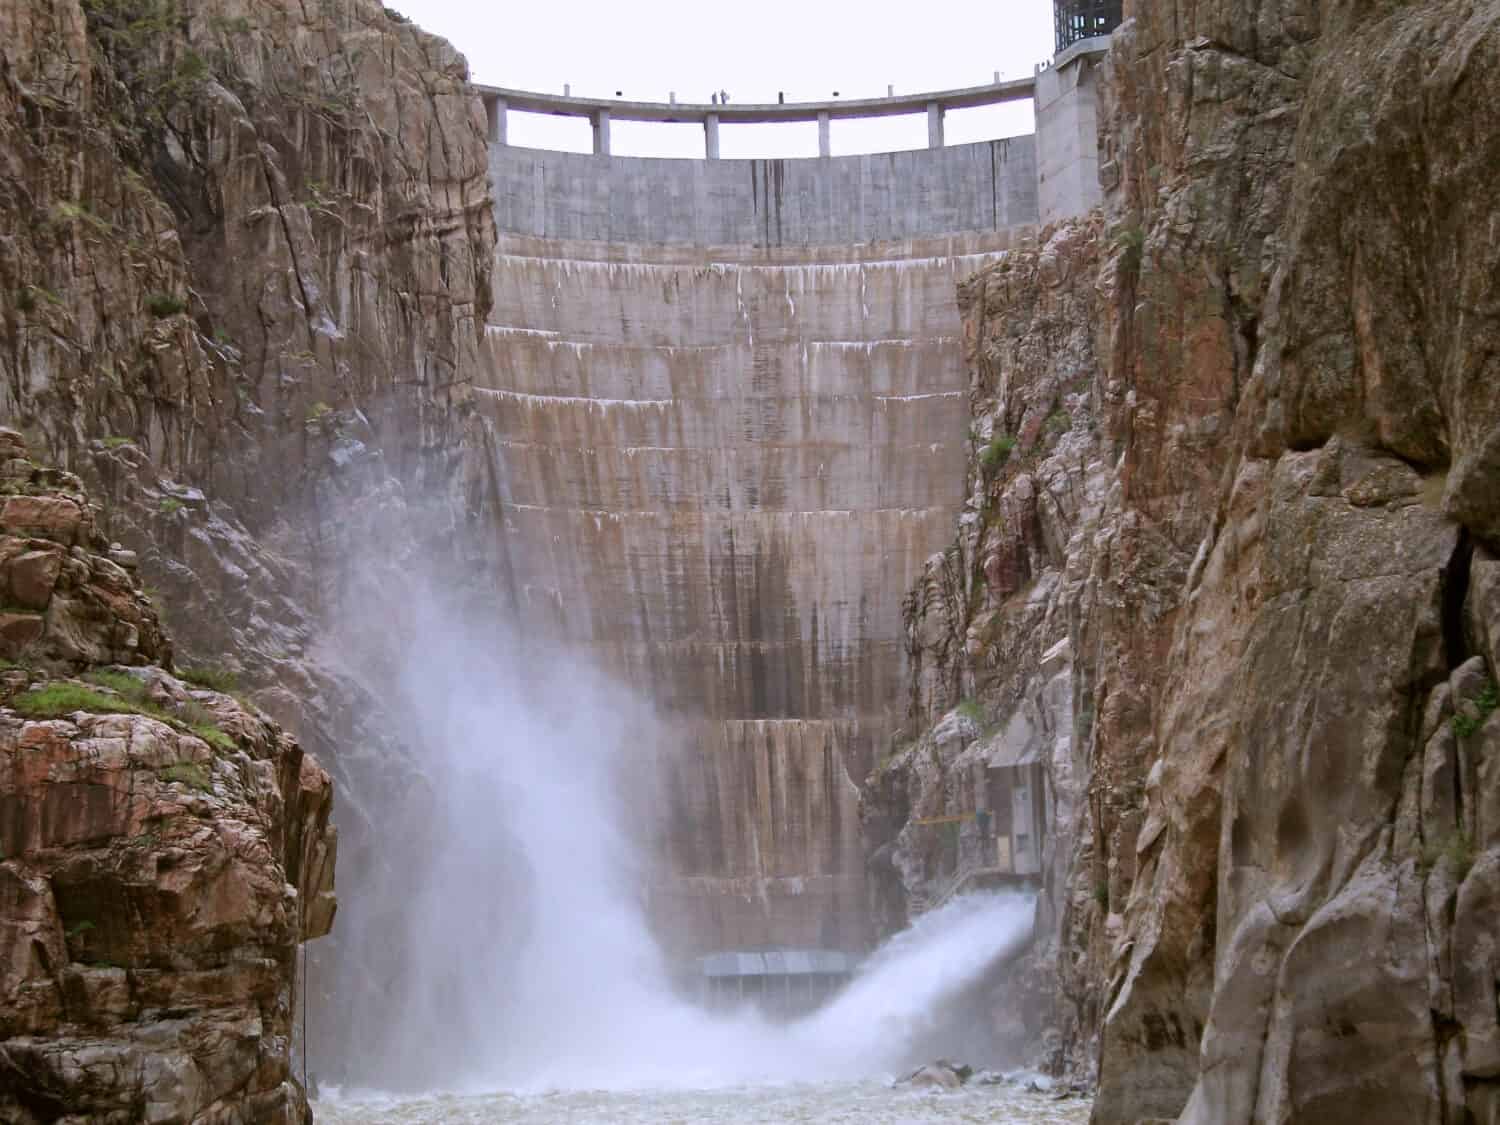 Buffalo Bill Dam is almost full in Cody, Wyoming, USA